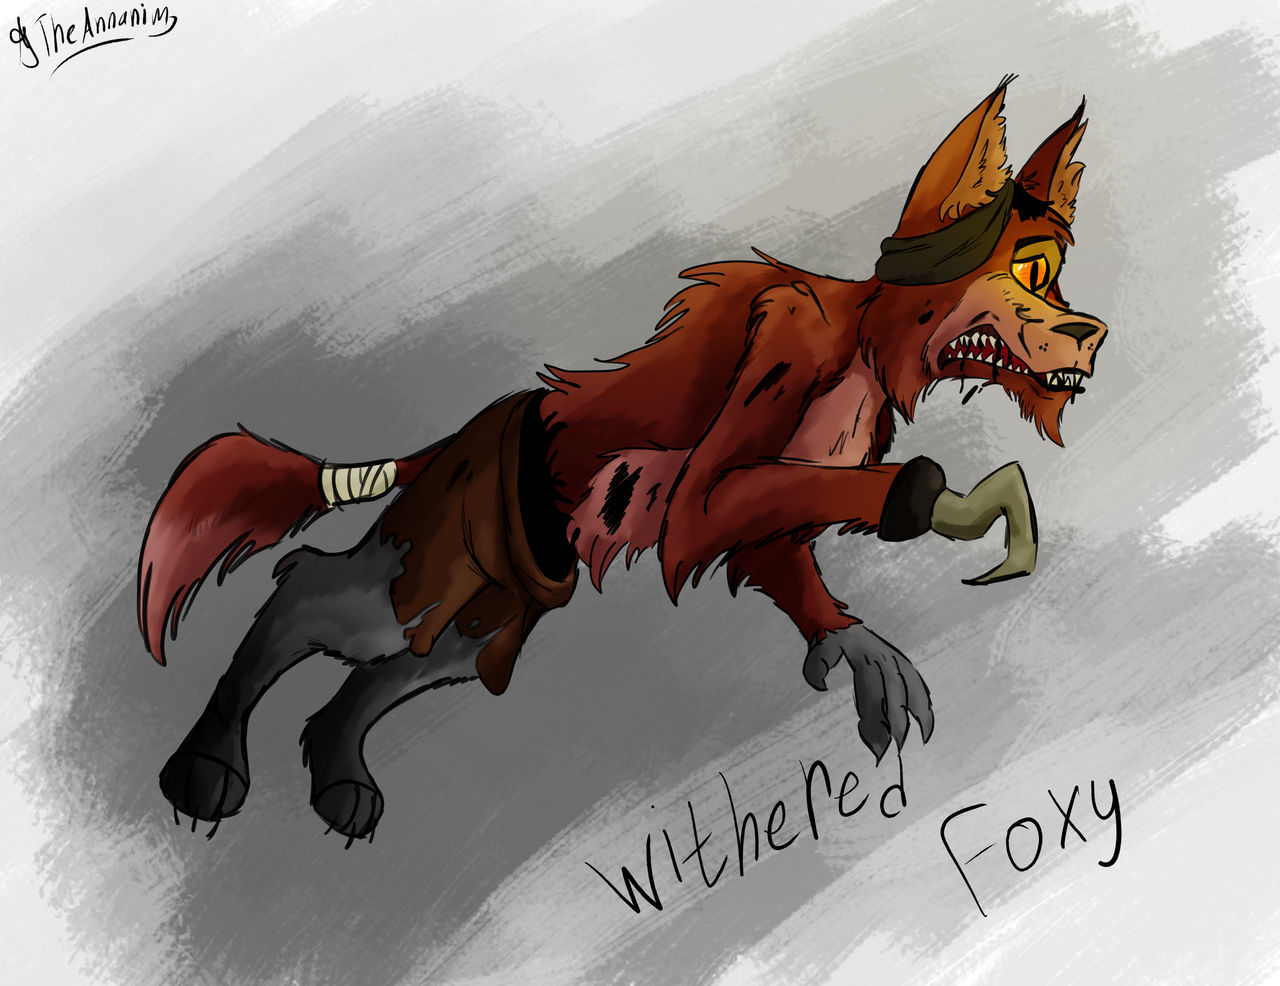 Withered Foxy jumpscare by AzamatBlender on DeviantArt